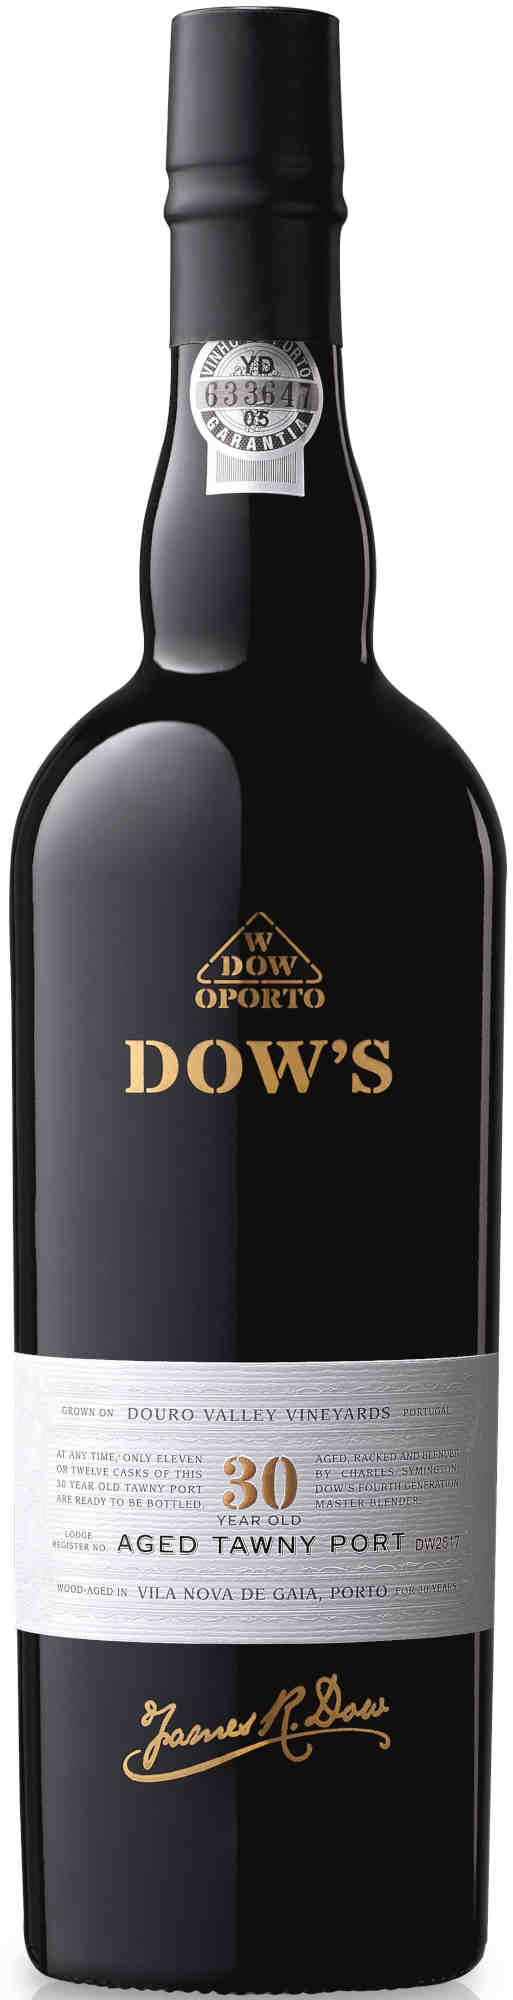 Dows-30-Years-Tawny-Port